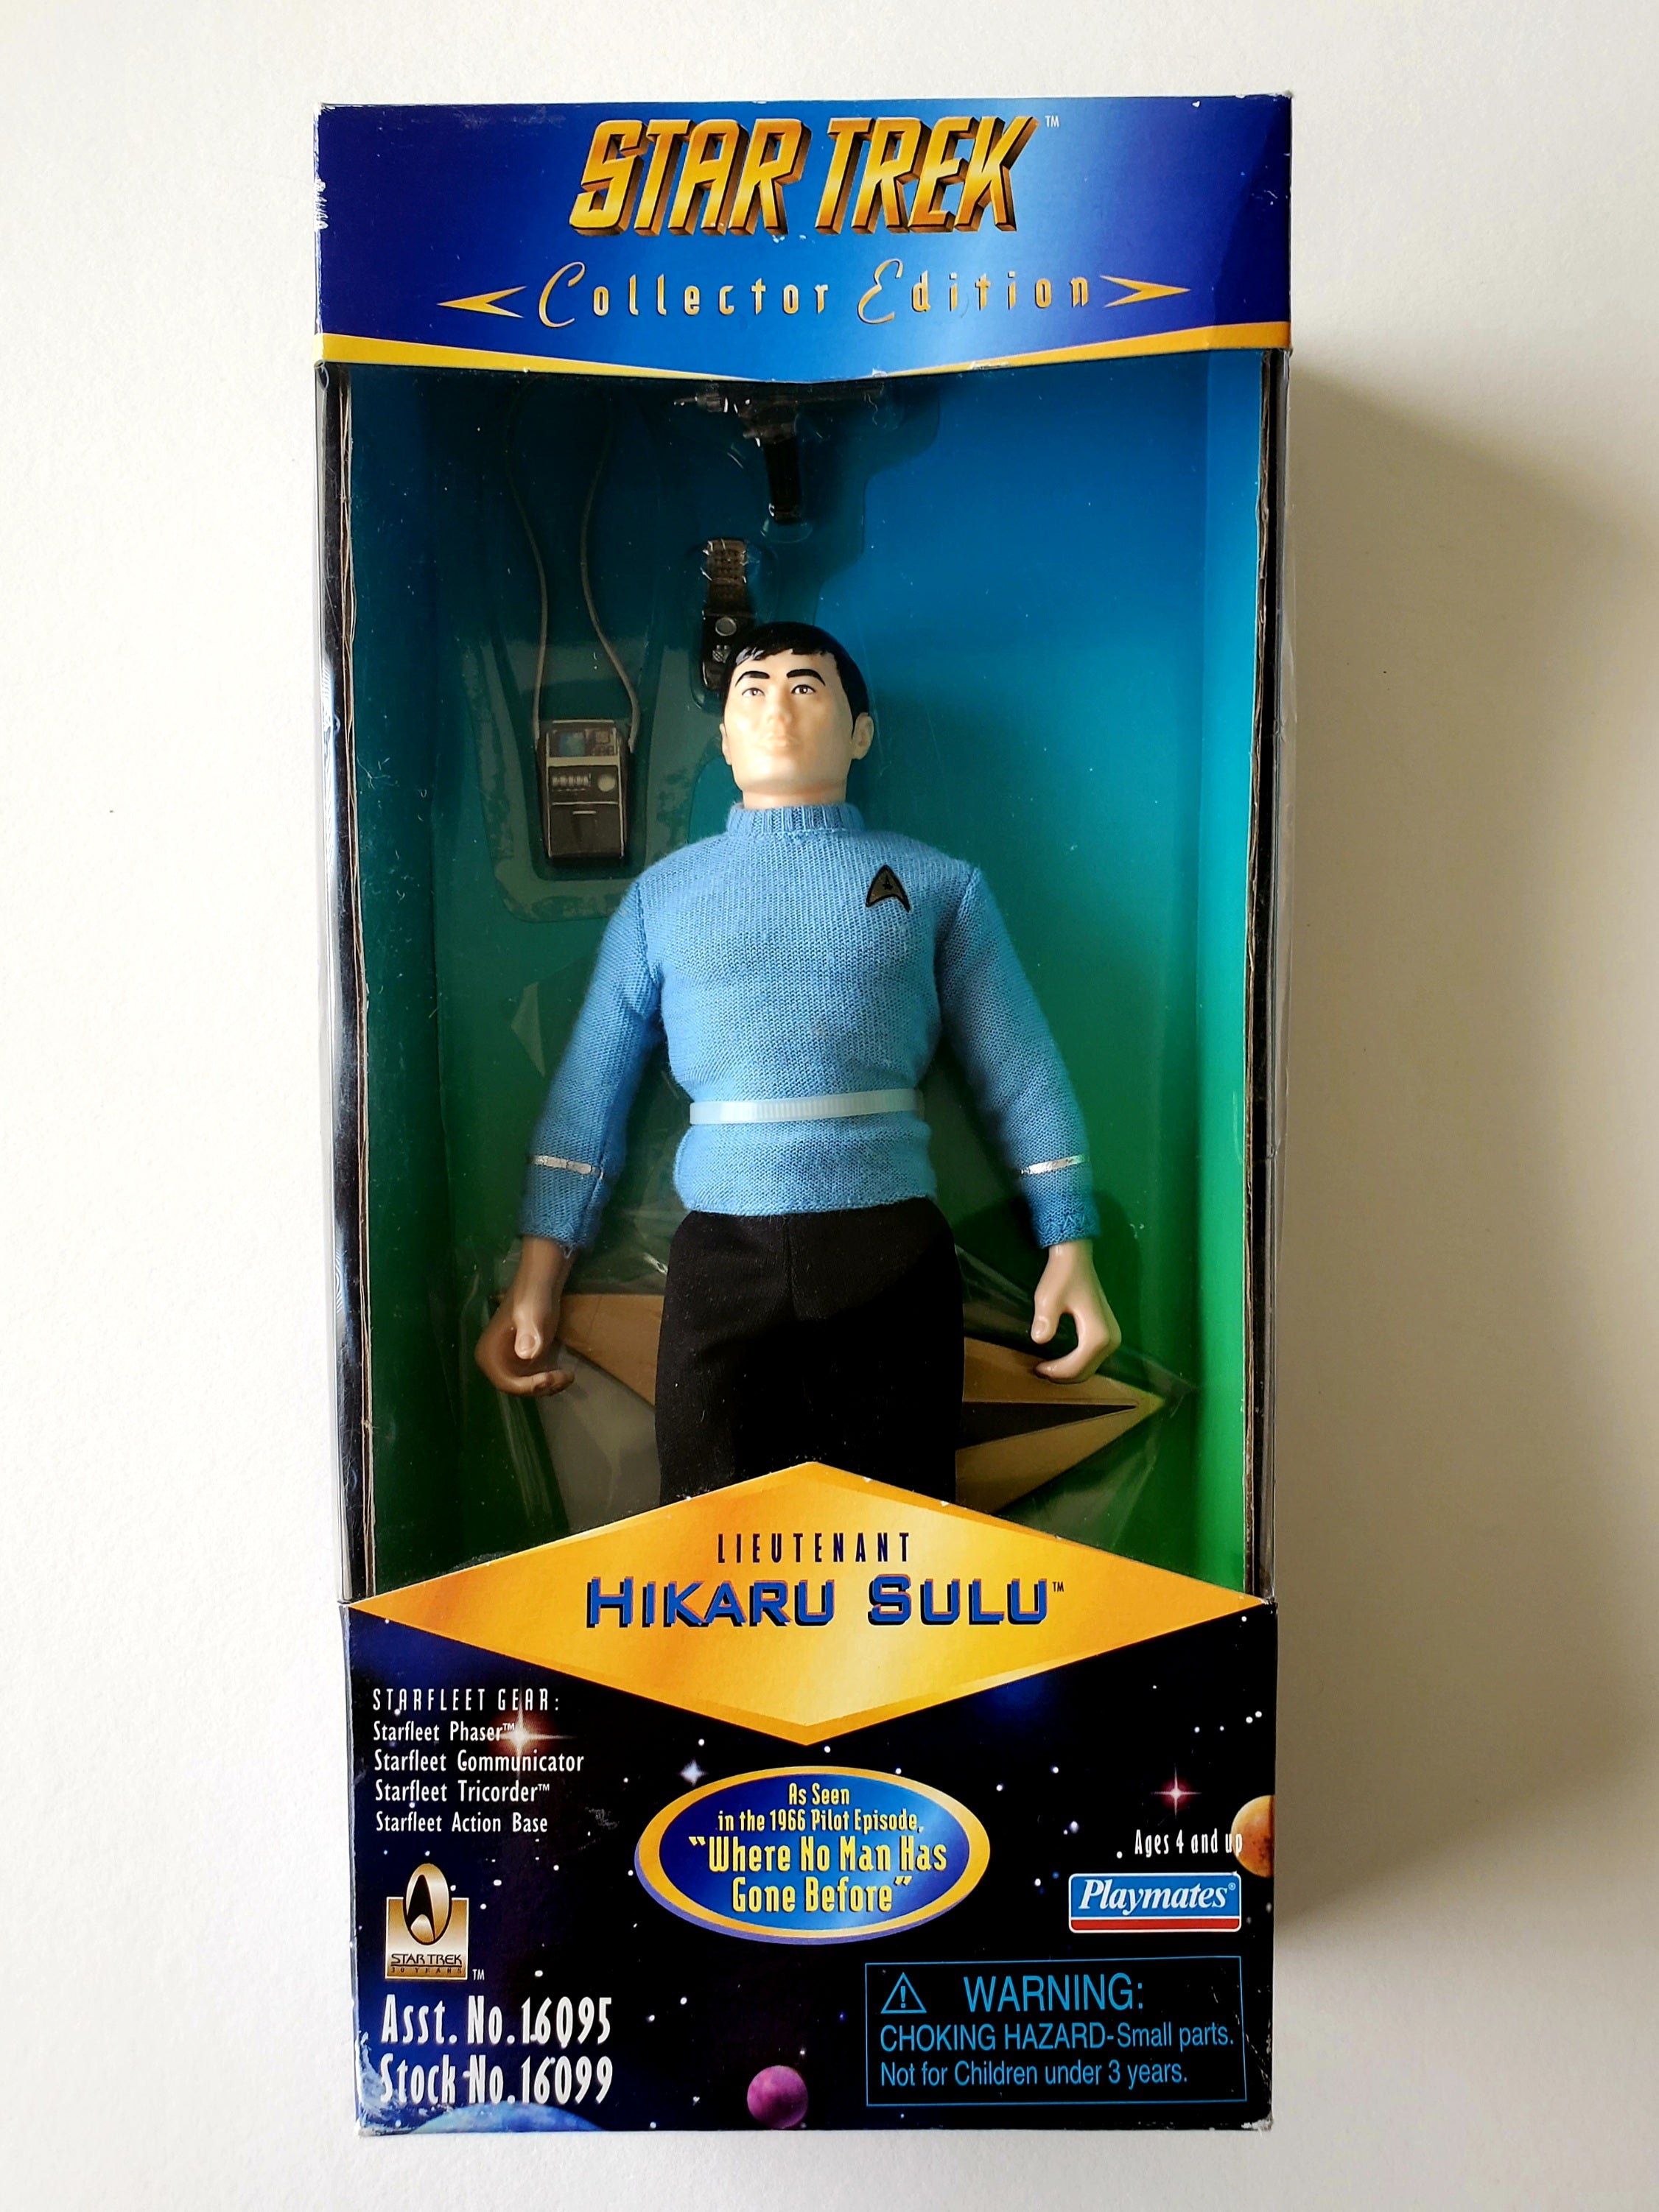 Star Trek Collector Edition Lieutenant Hikaru Sulu as seen in 